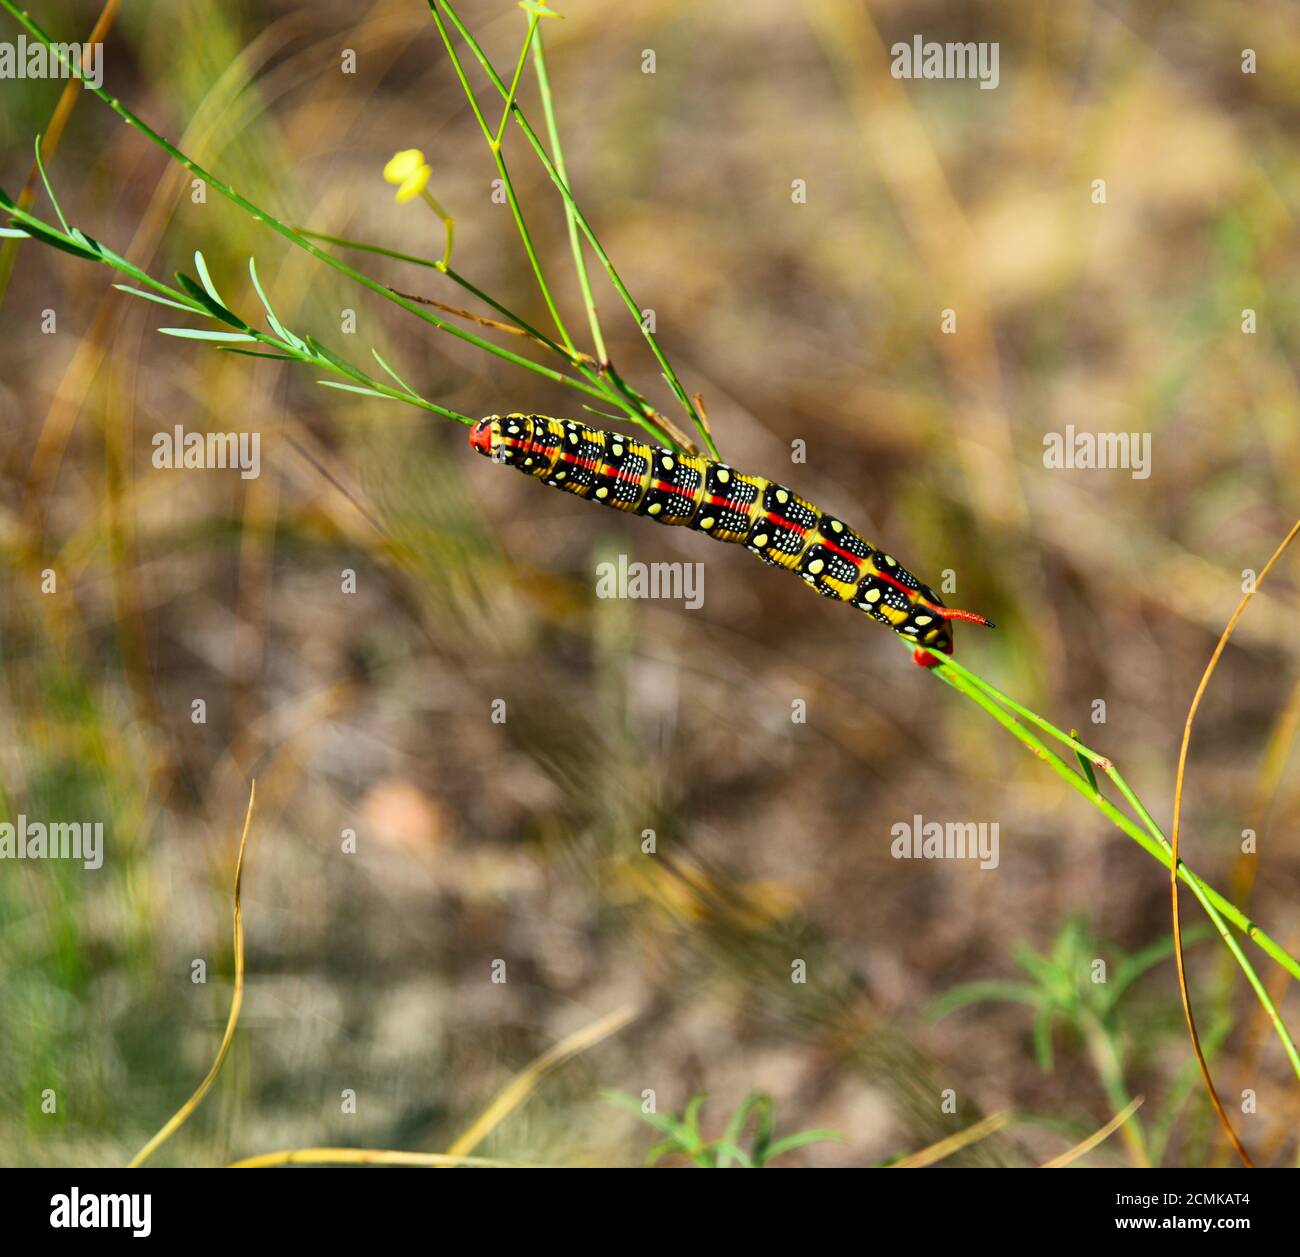 Hyles euphorbiae caterpillar on a stalk of grass Stock Photo